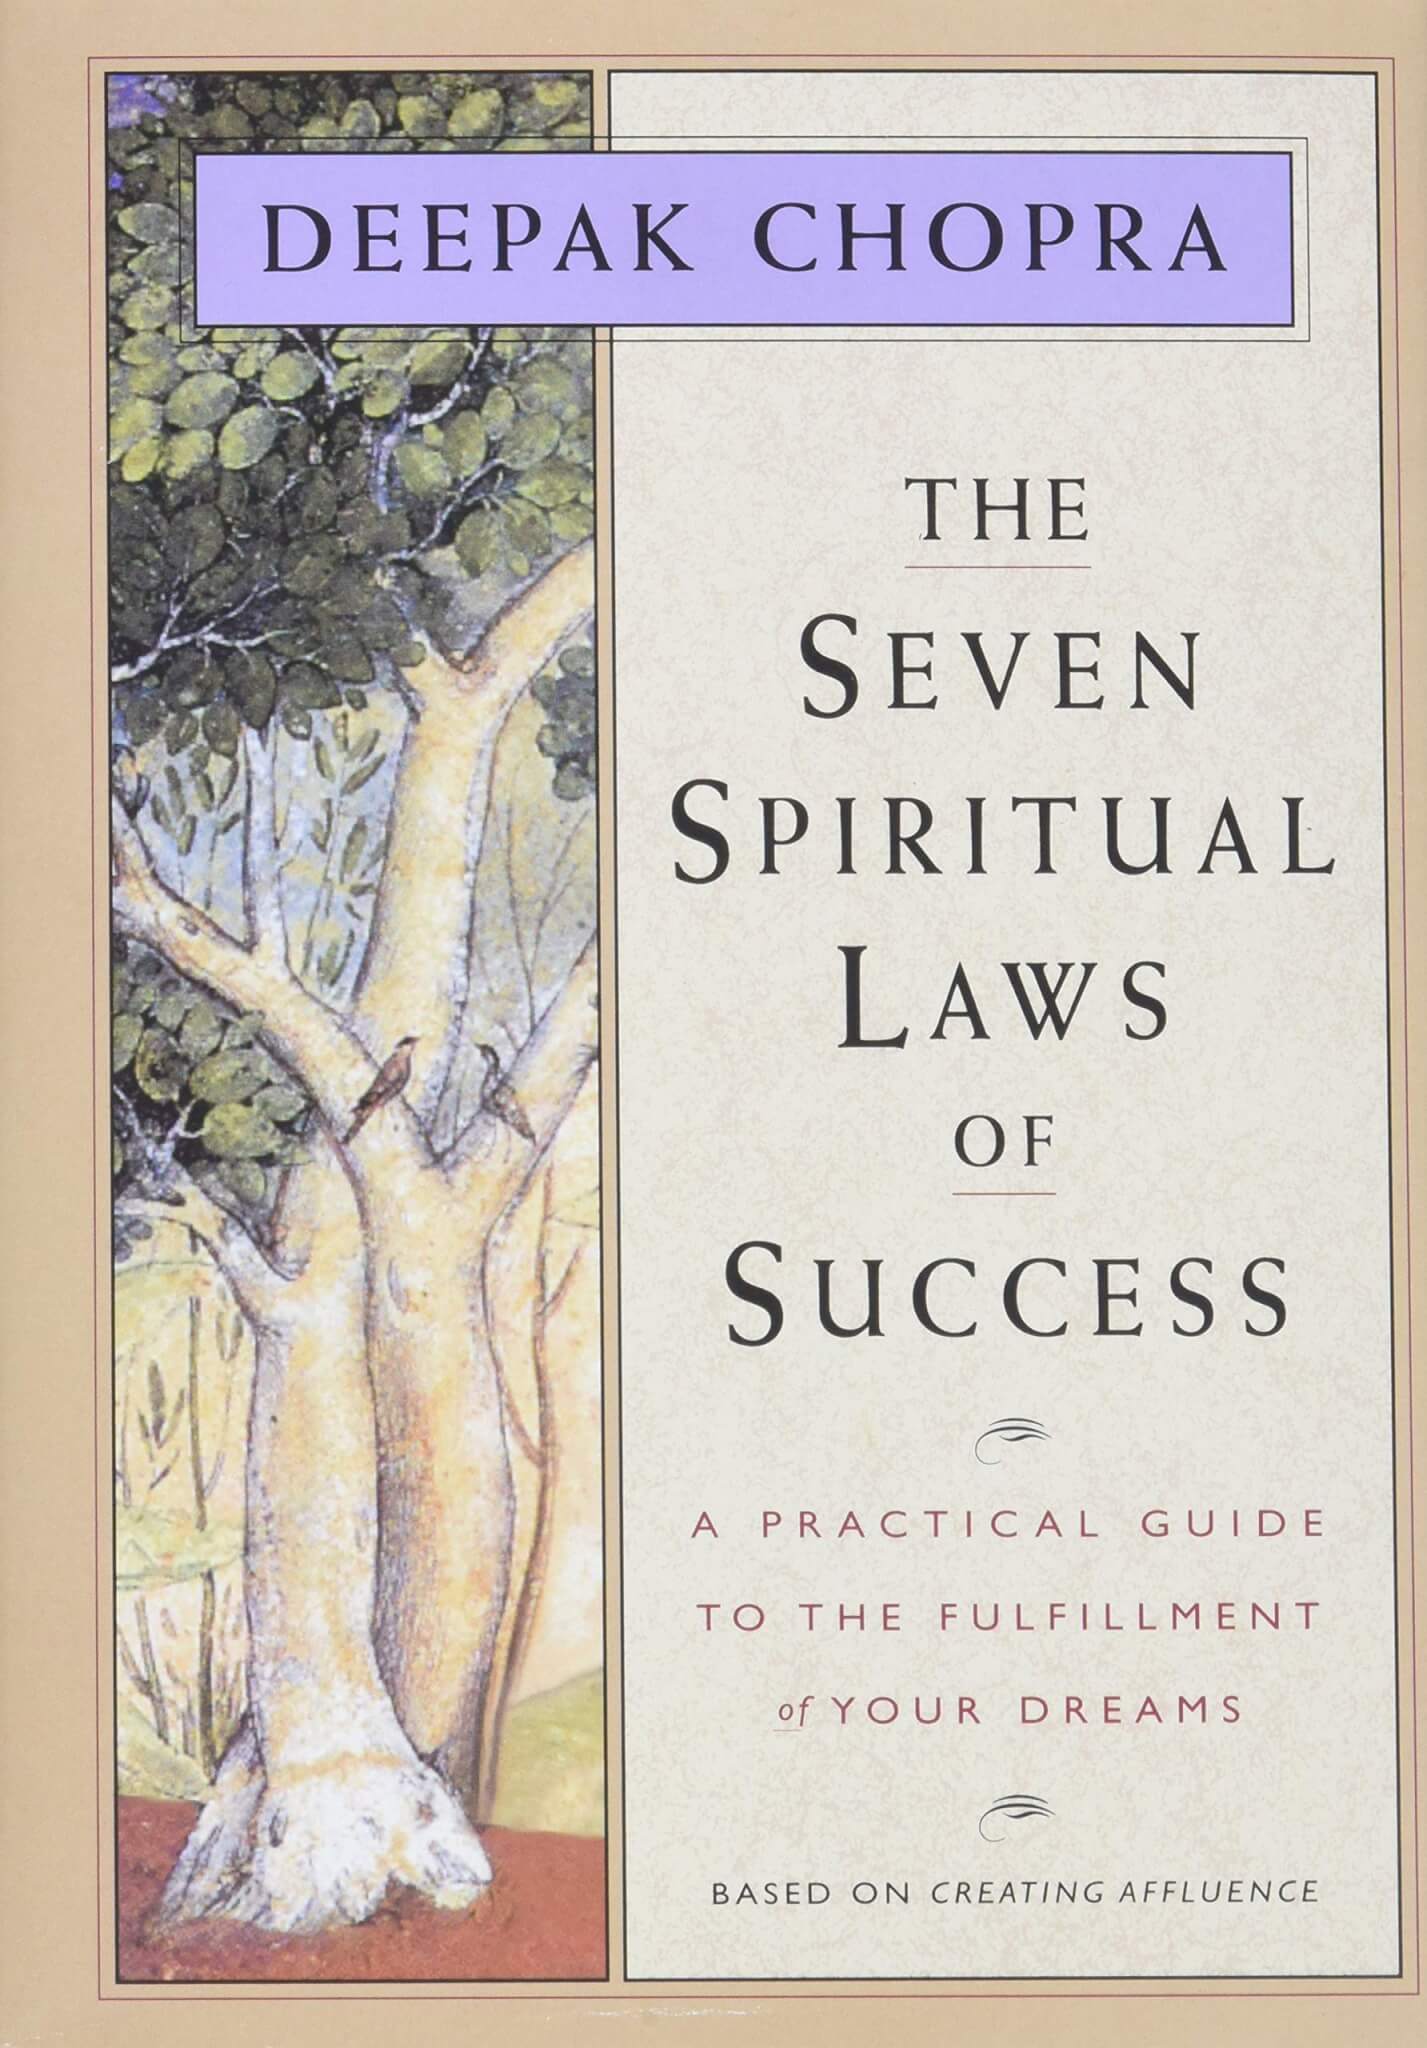 "The Seven Spiritual Laws of Success" by Deepak Chopra